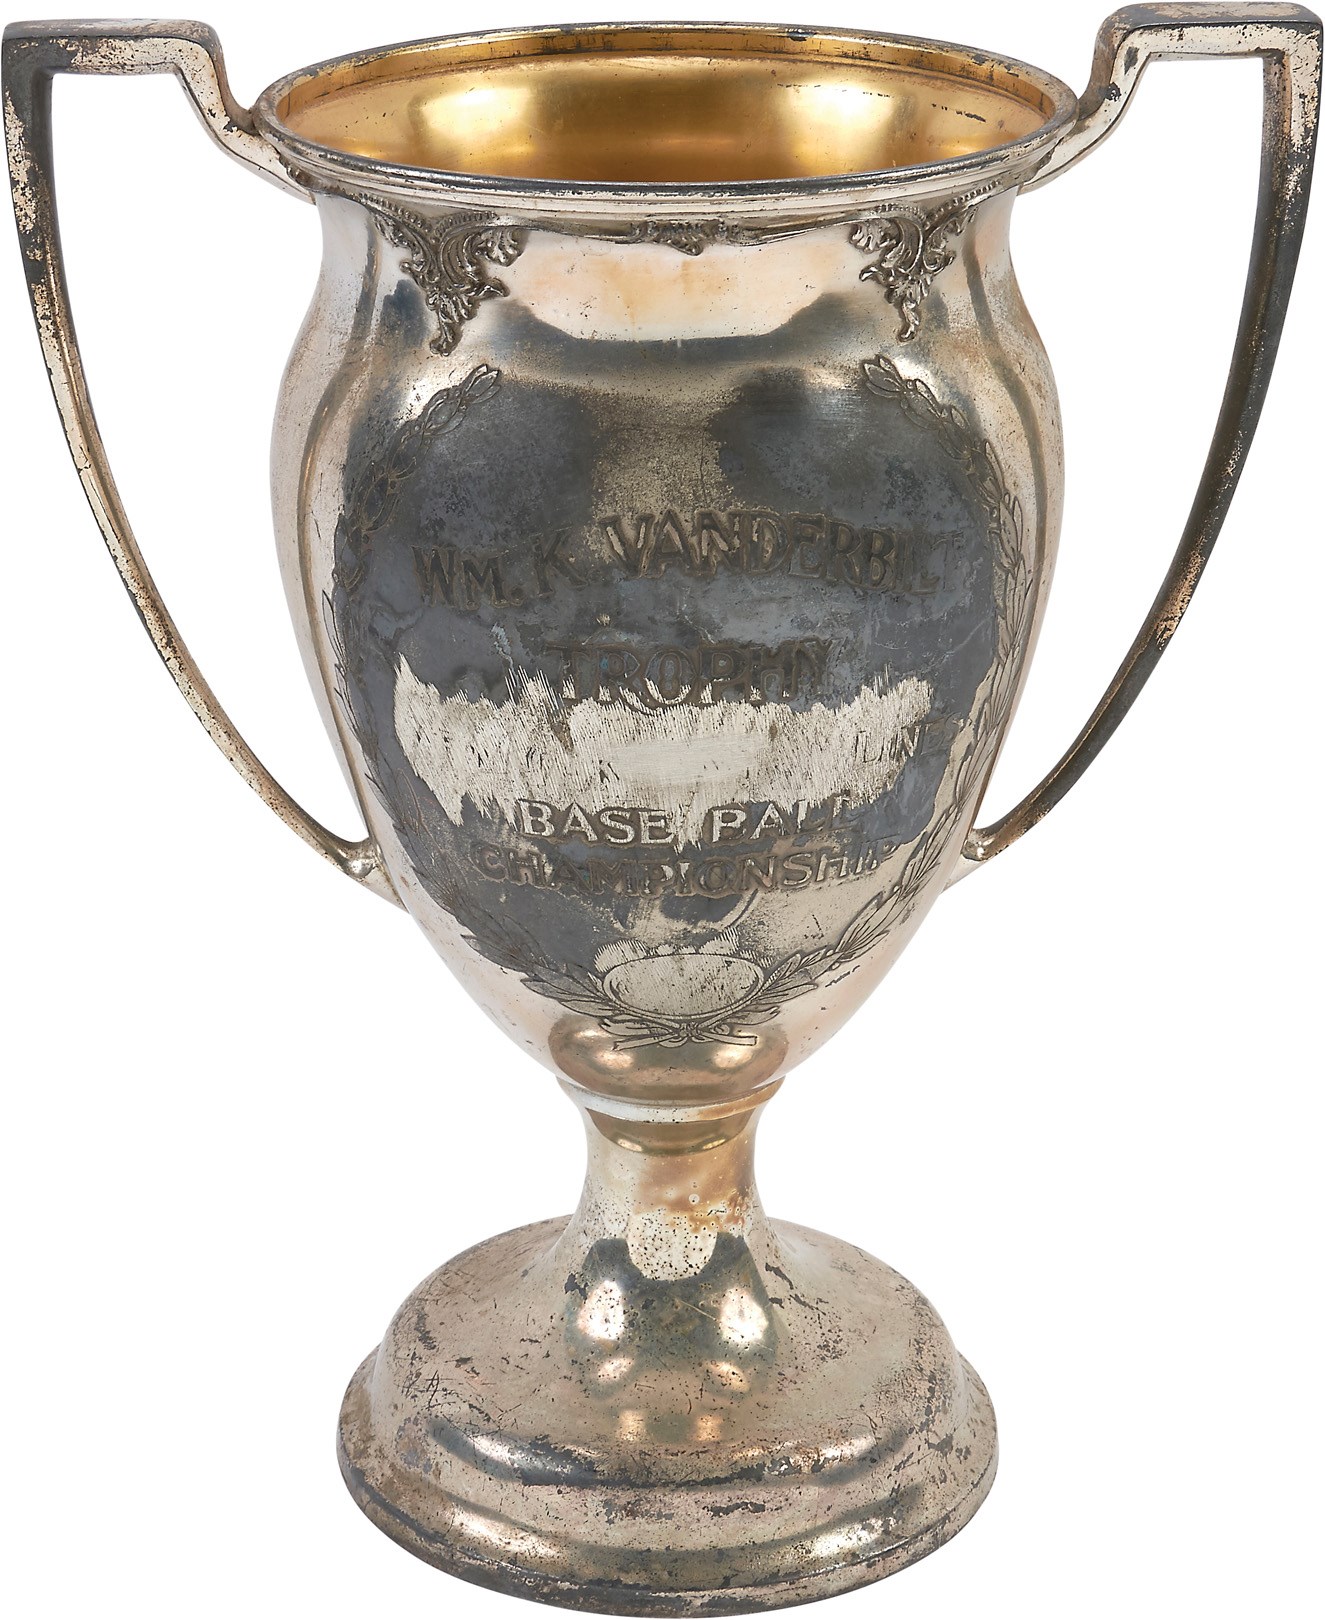 William K. Vanderbilt Base Ball Championship Trophy (Circa 1900)